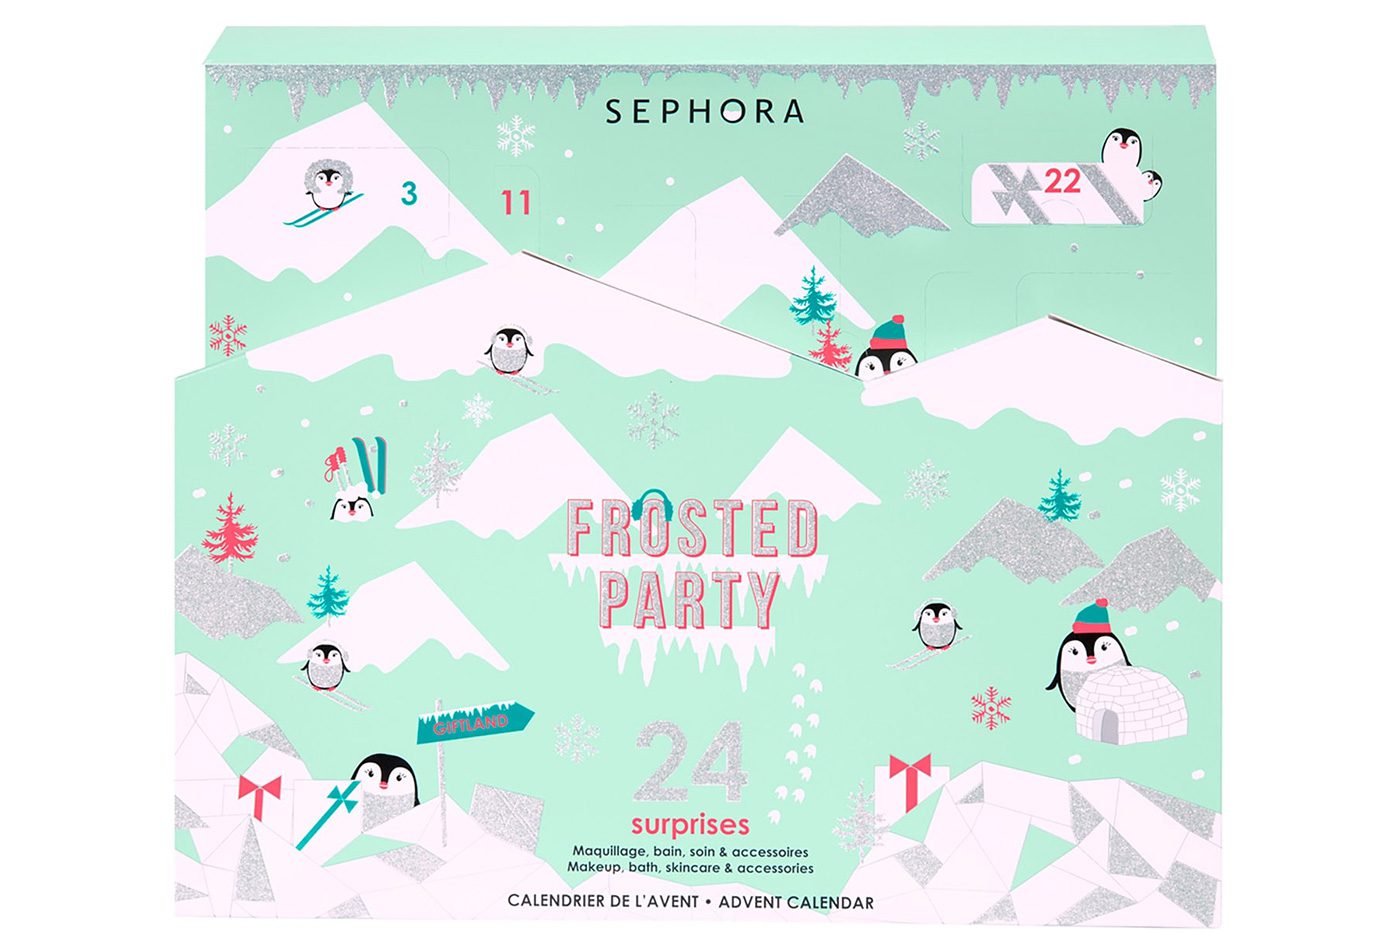 Calendrier de l'Avent Sephora 2019 Frosted Party : code promo, spoiler